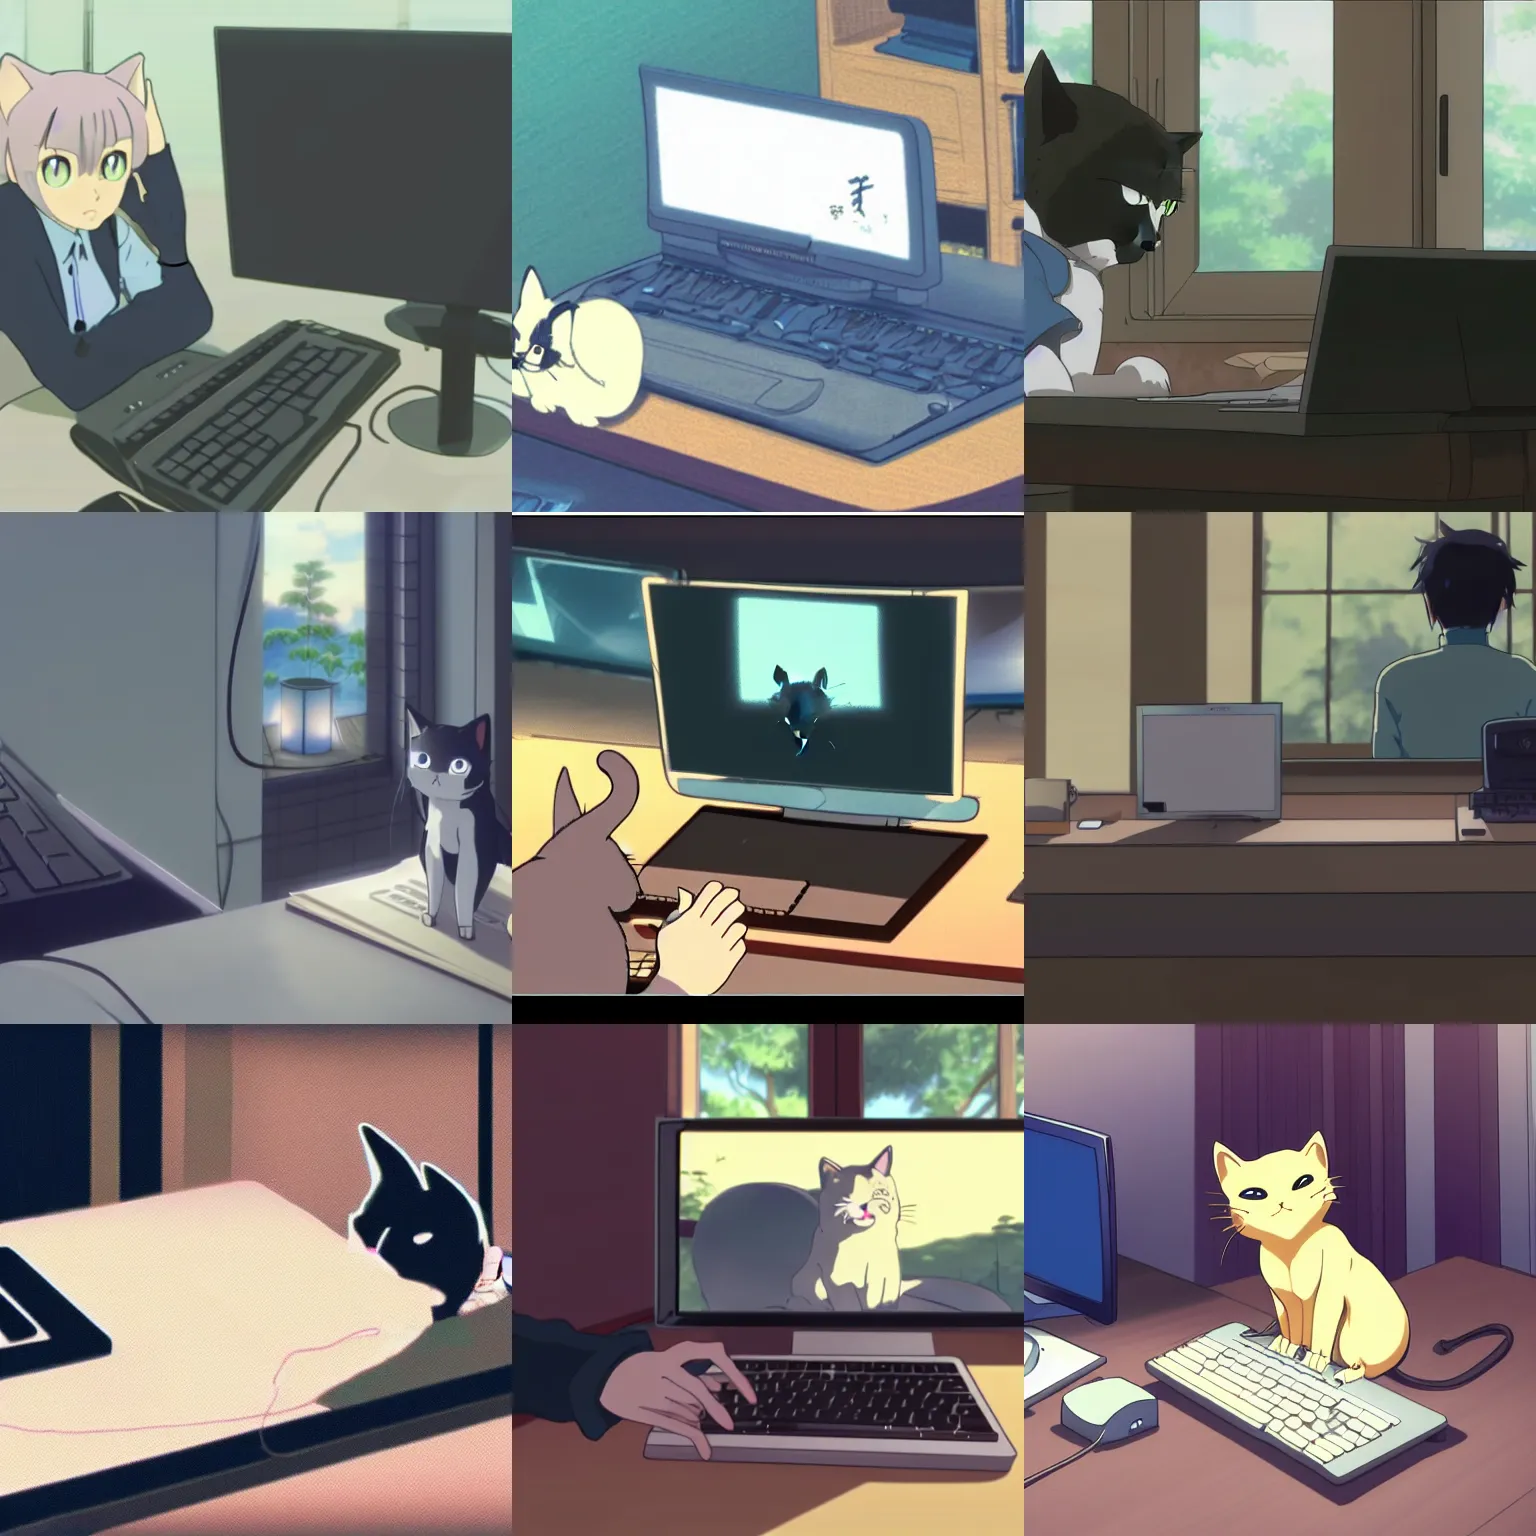 Prompt: a cat typing on a desktop computer, anime screenshot, by makoto shinkai